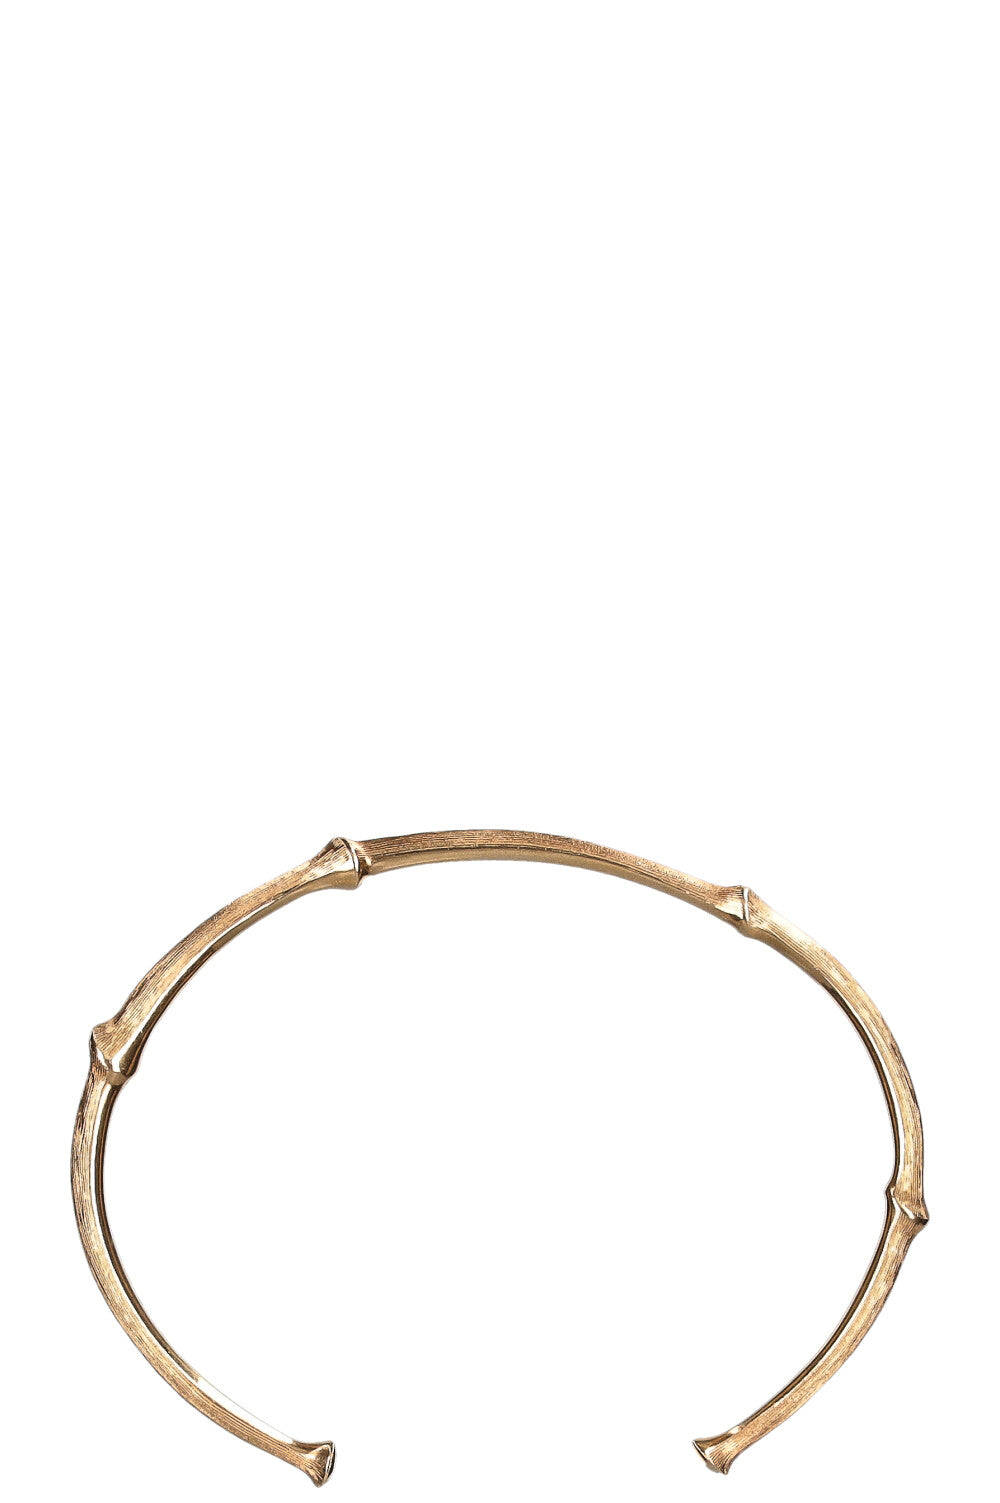 OLE LYNGGAARD Nature Bracelet 18k Gold